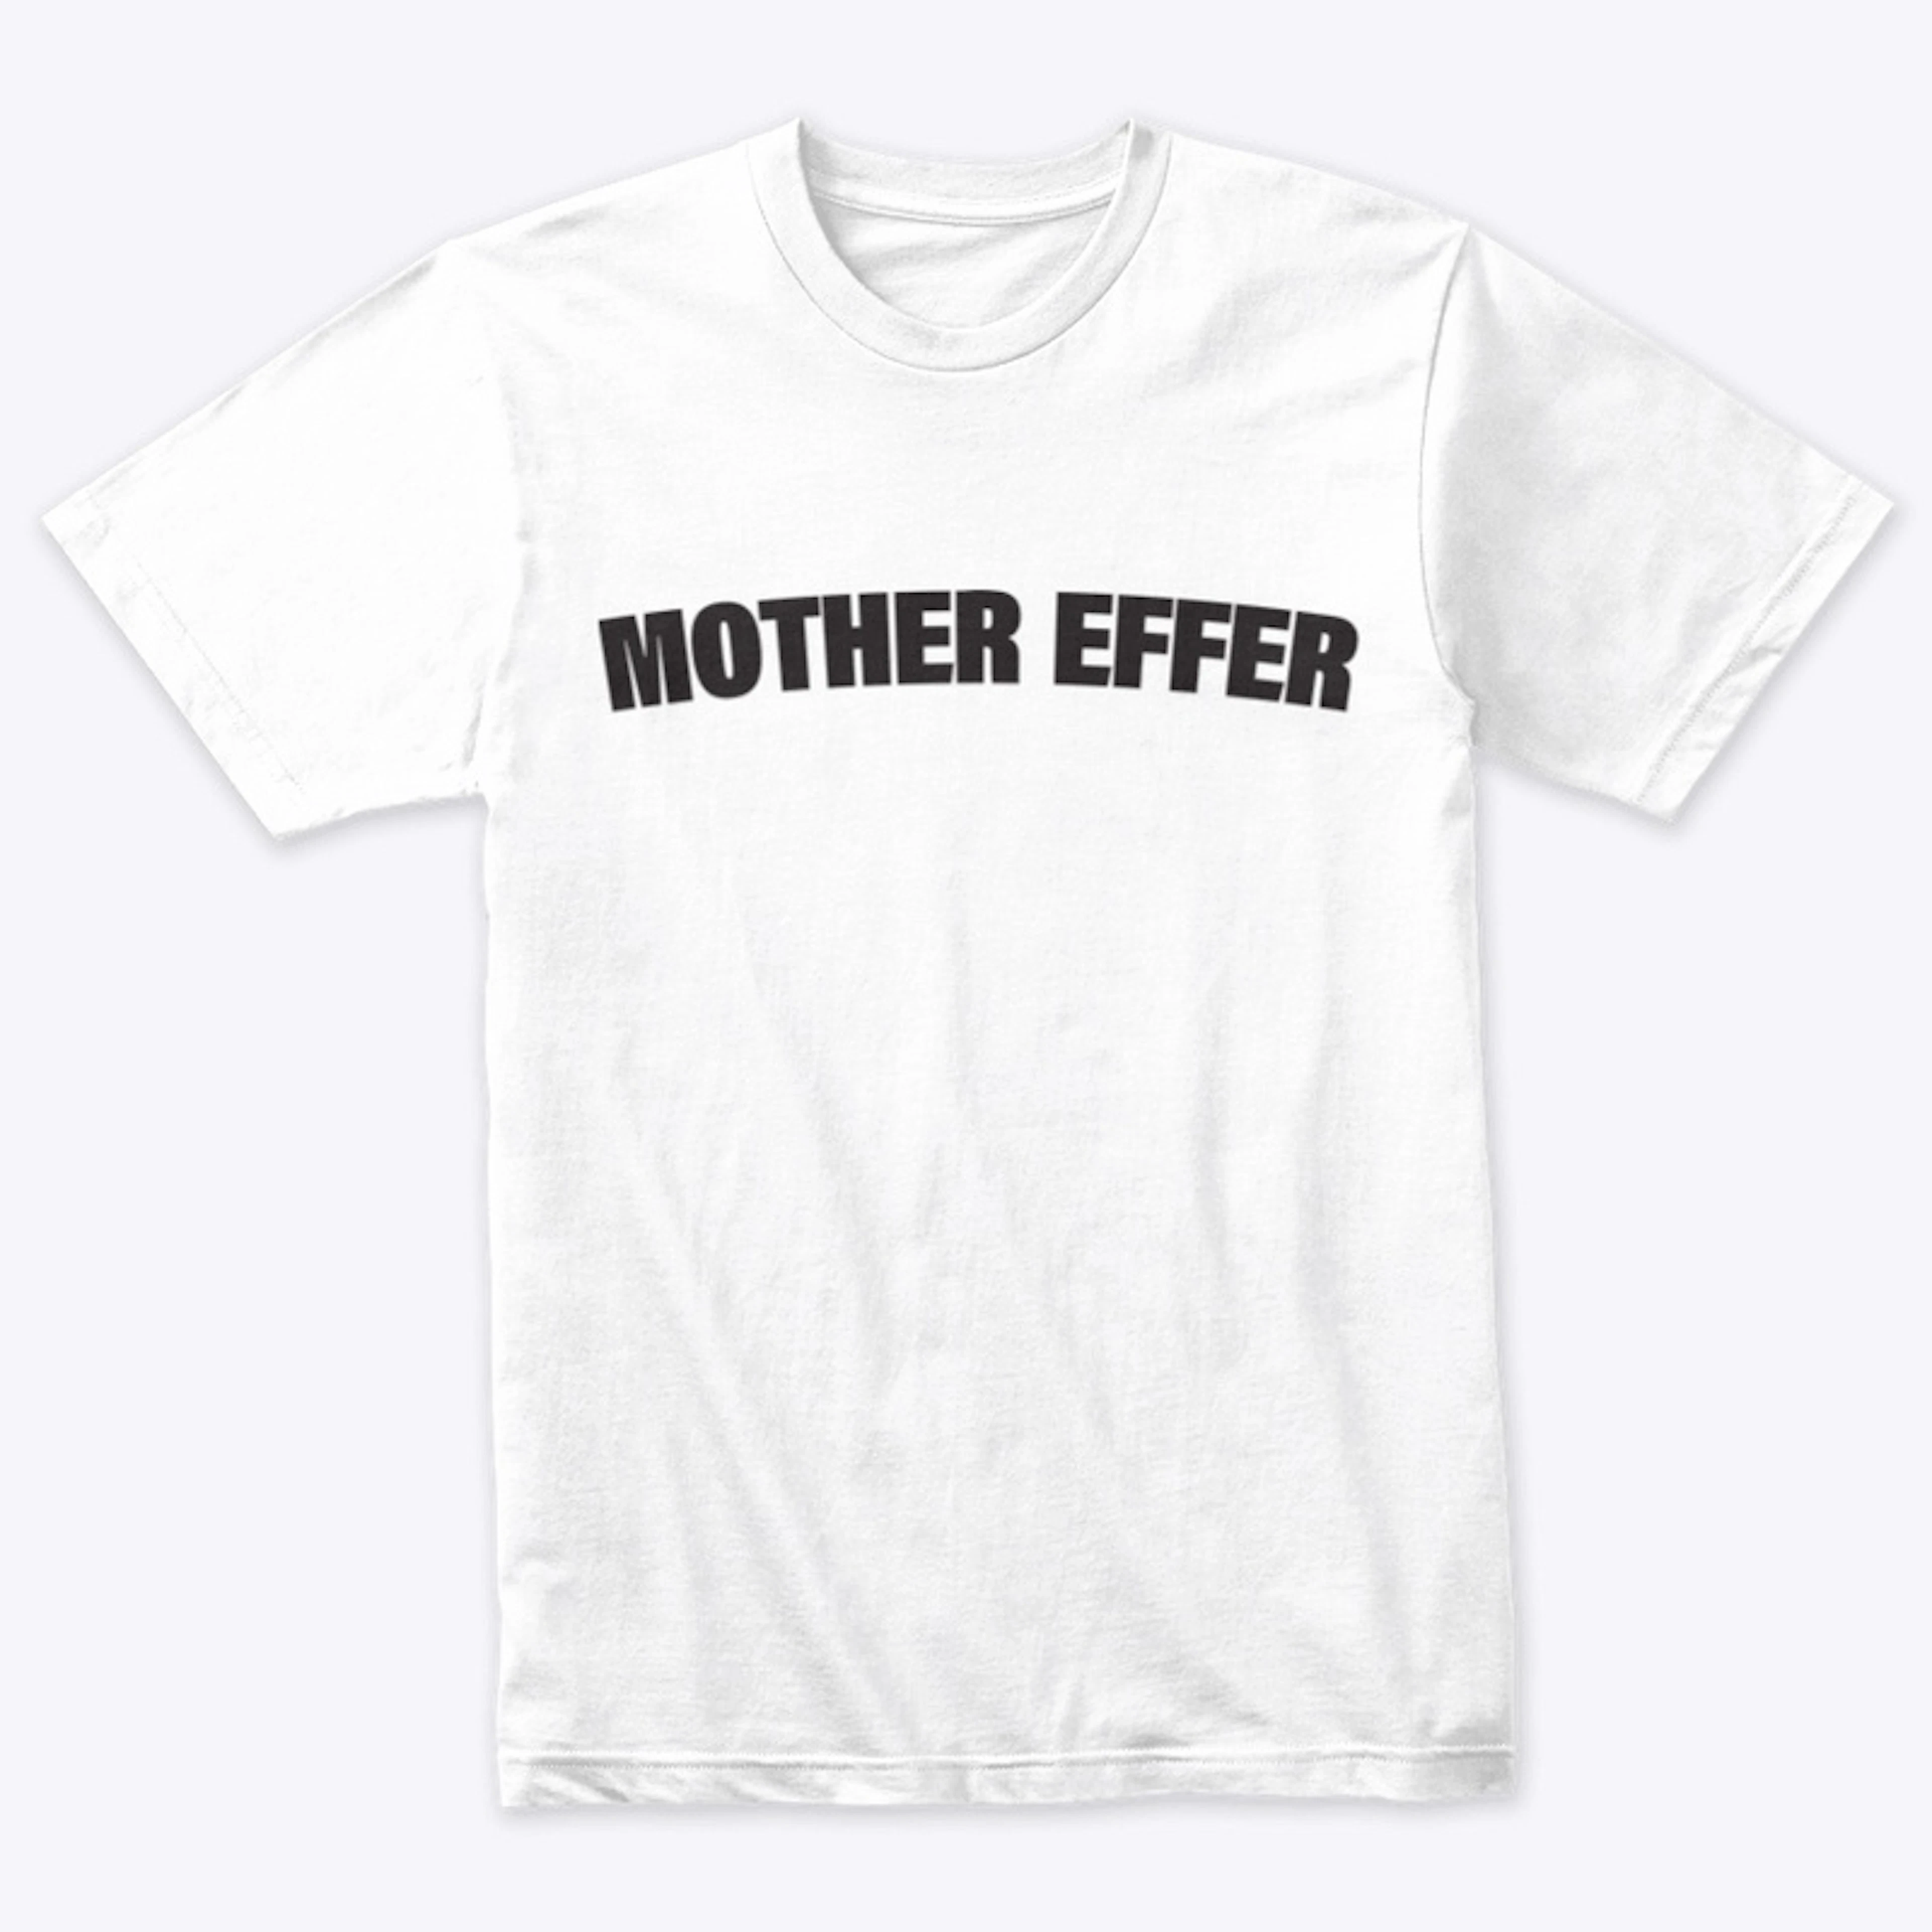 Mother Effer